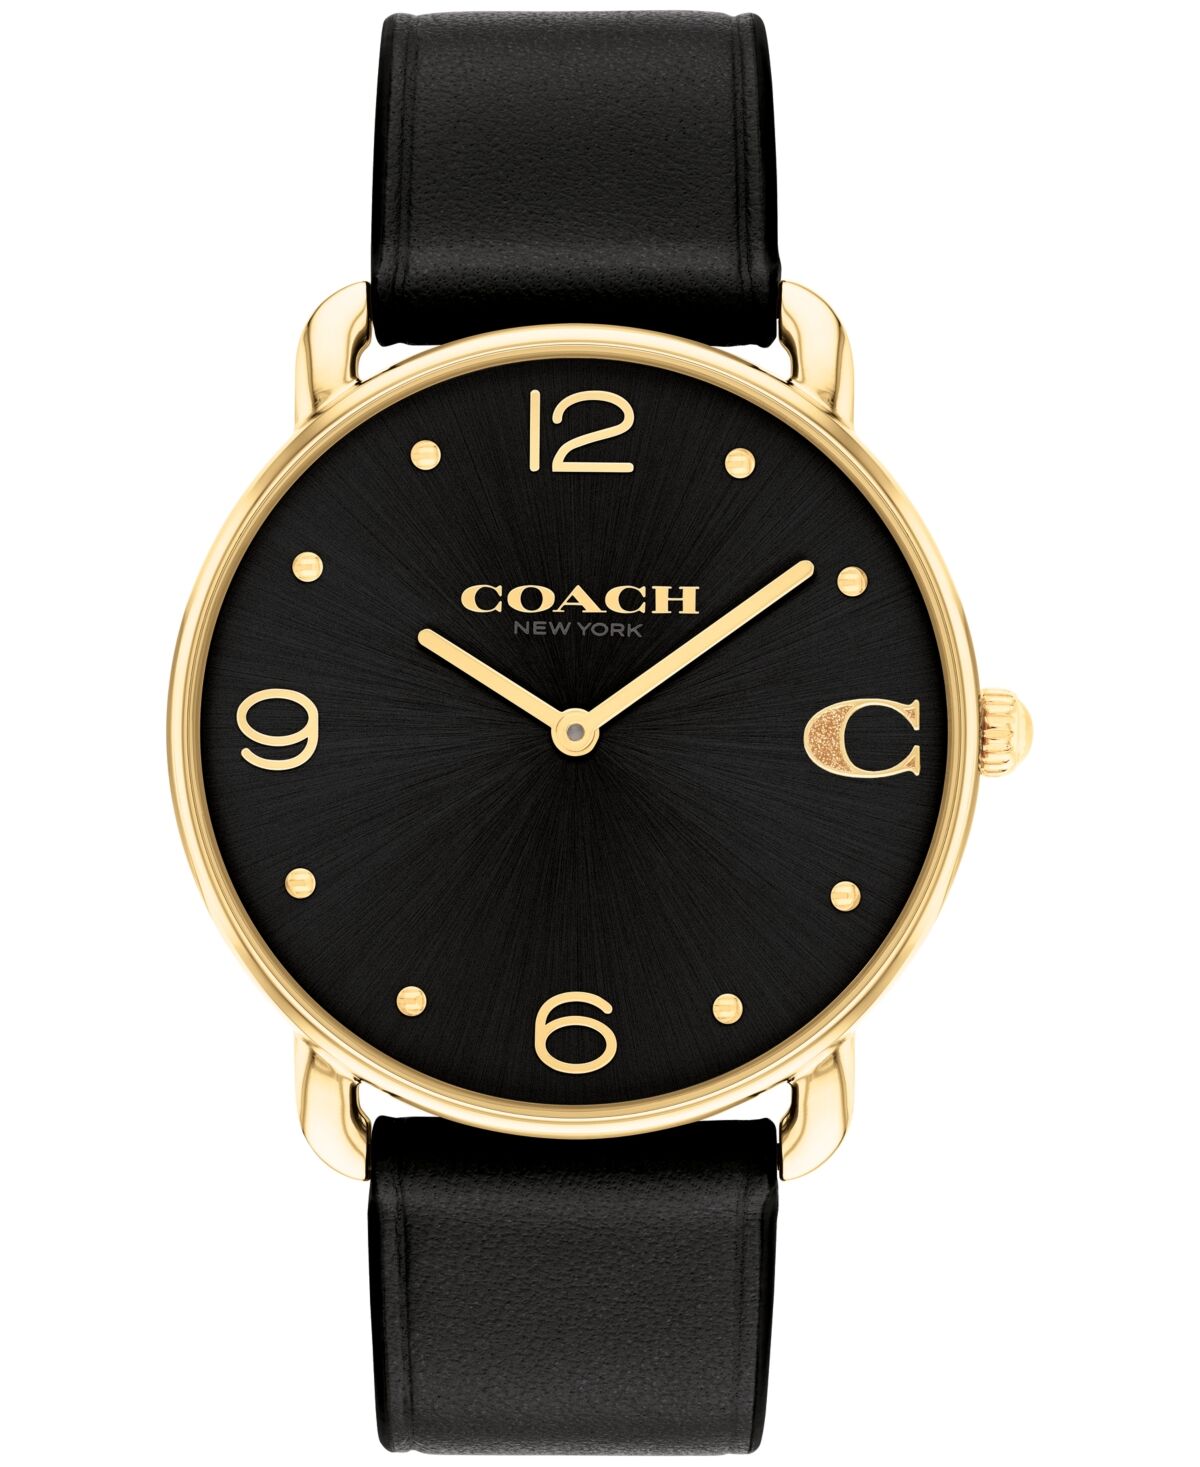 Coach Unisex Elliot Black Leather Strap Watch, 36mm - Black